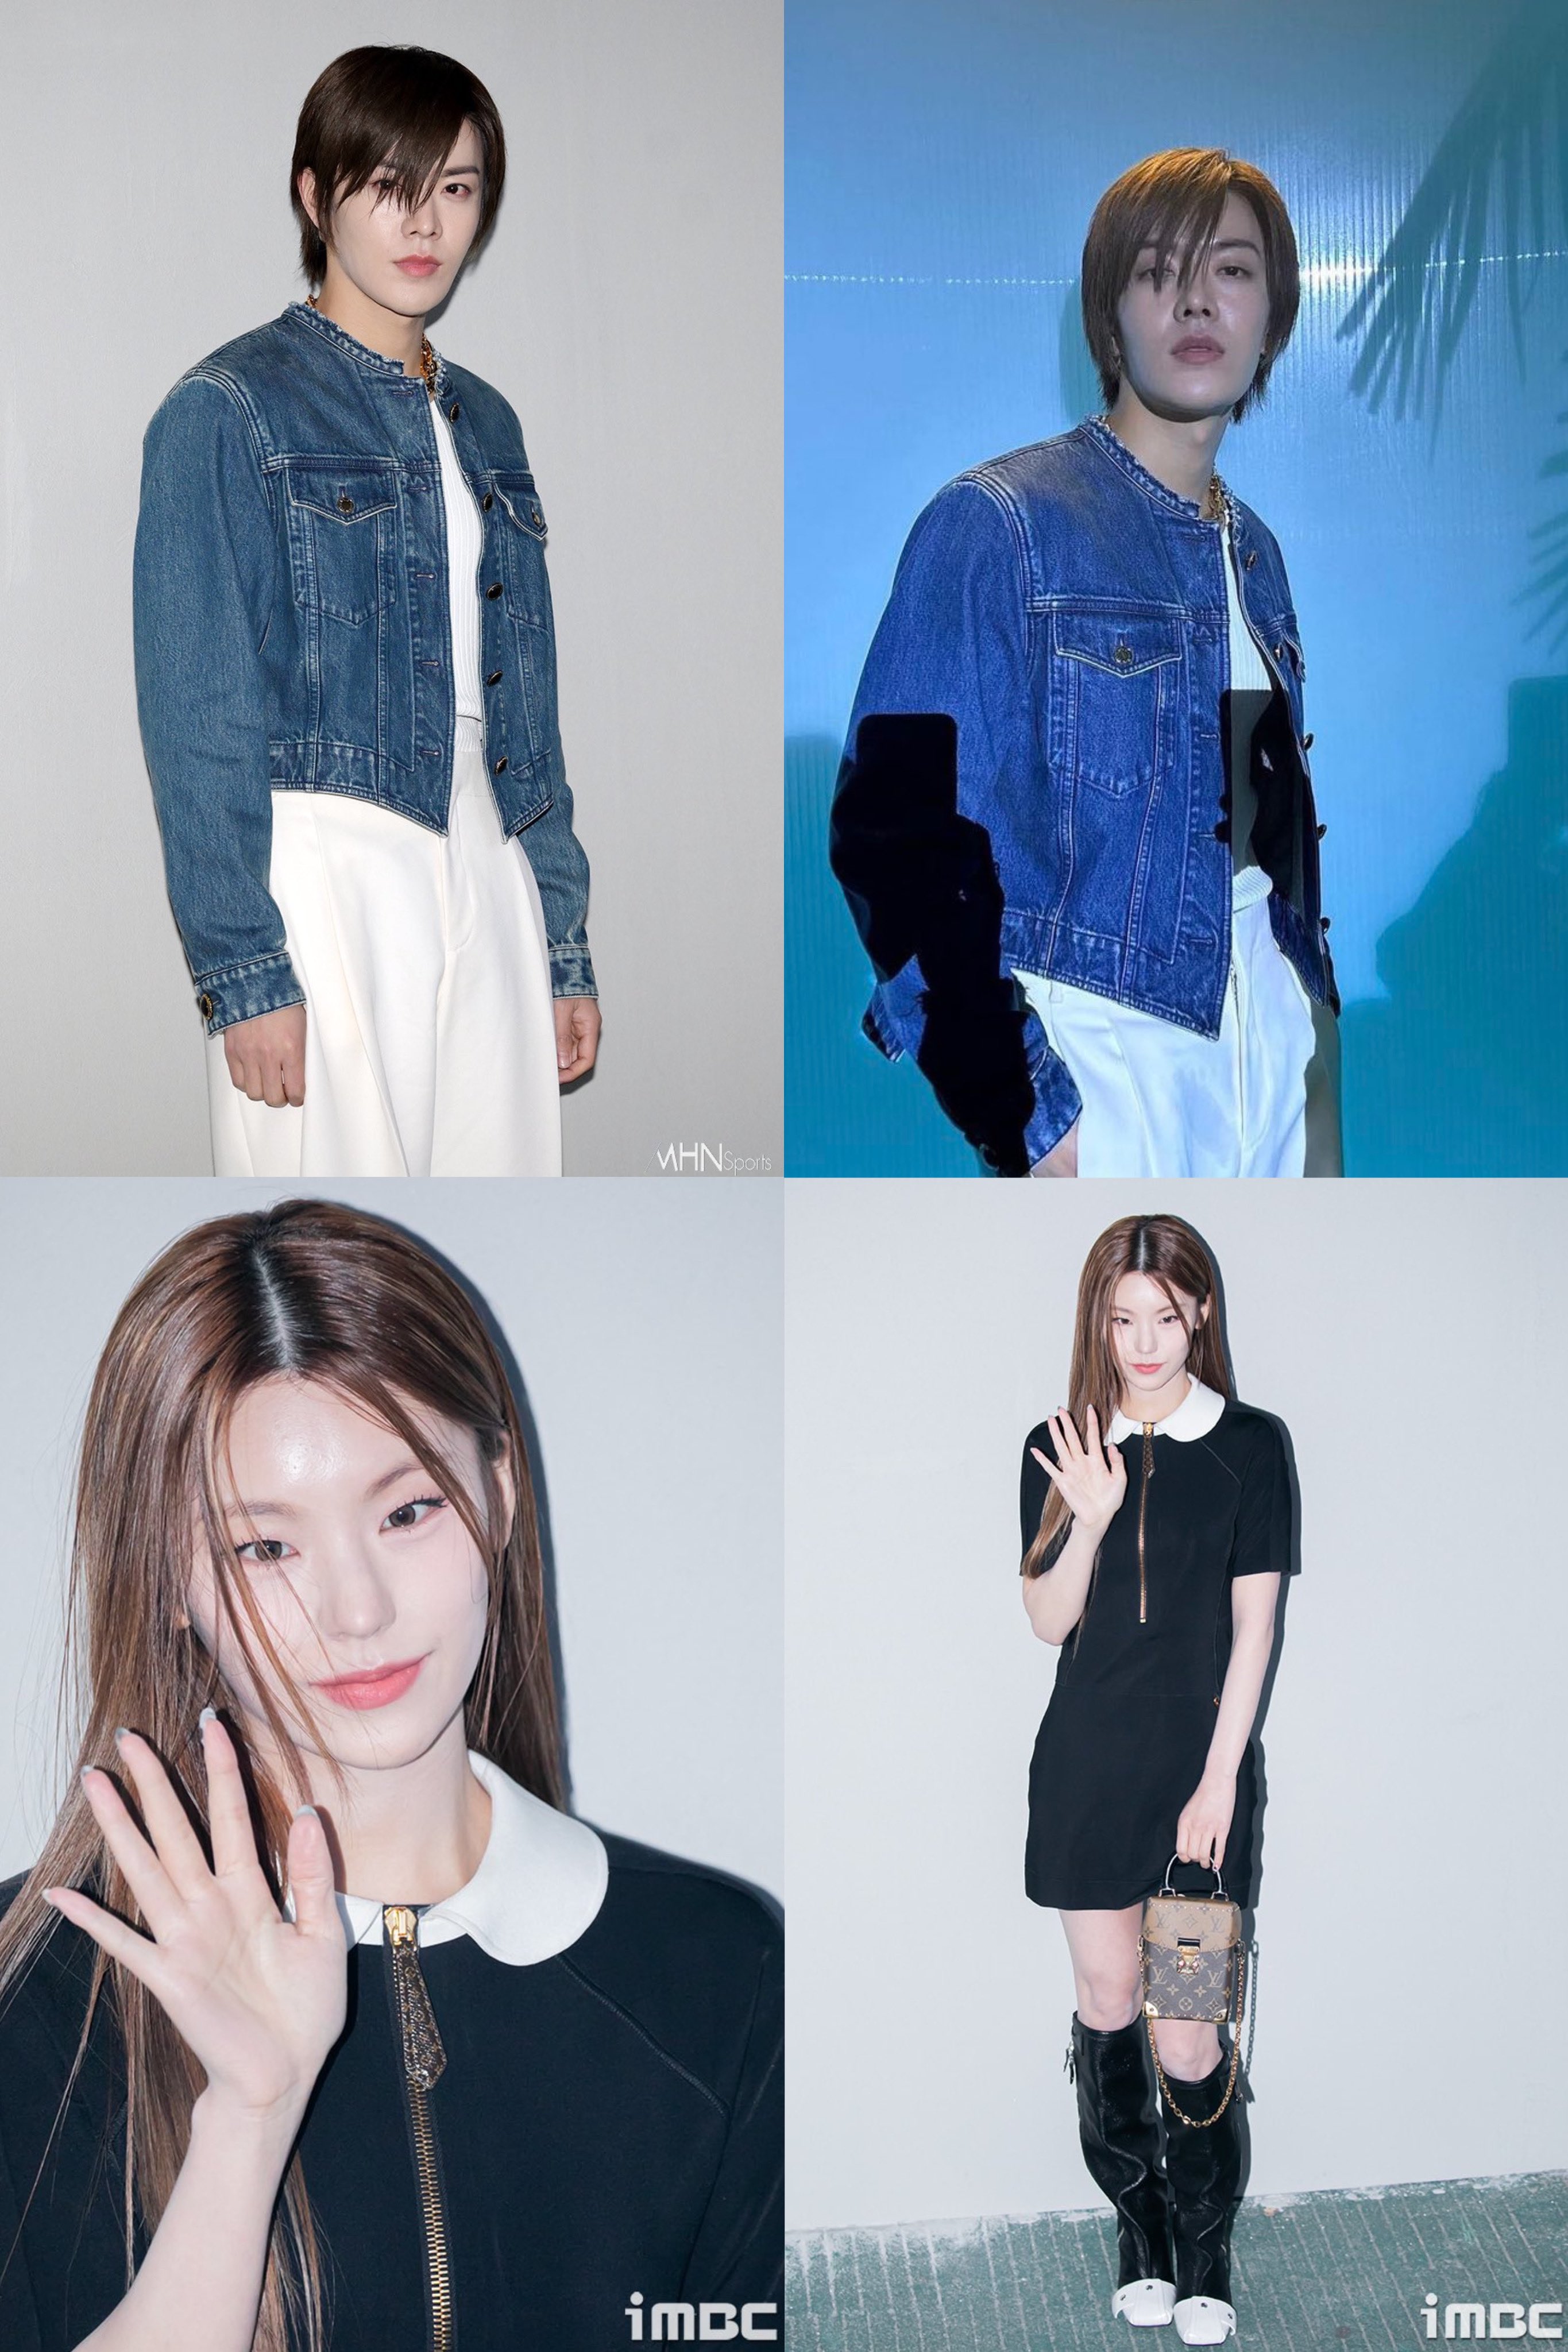 NewJeans' Hyein, Stray Kids' Felix and Girls' Generation's Taeyeon